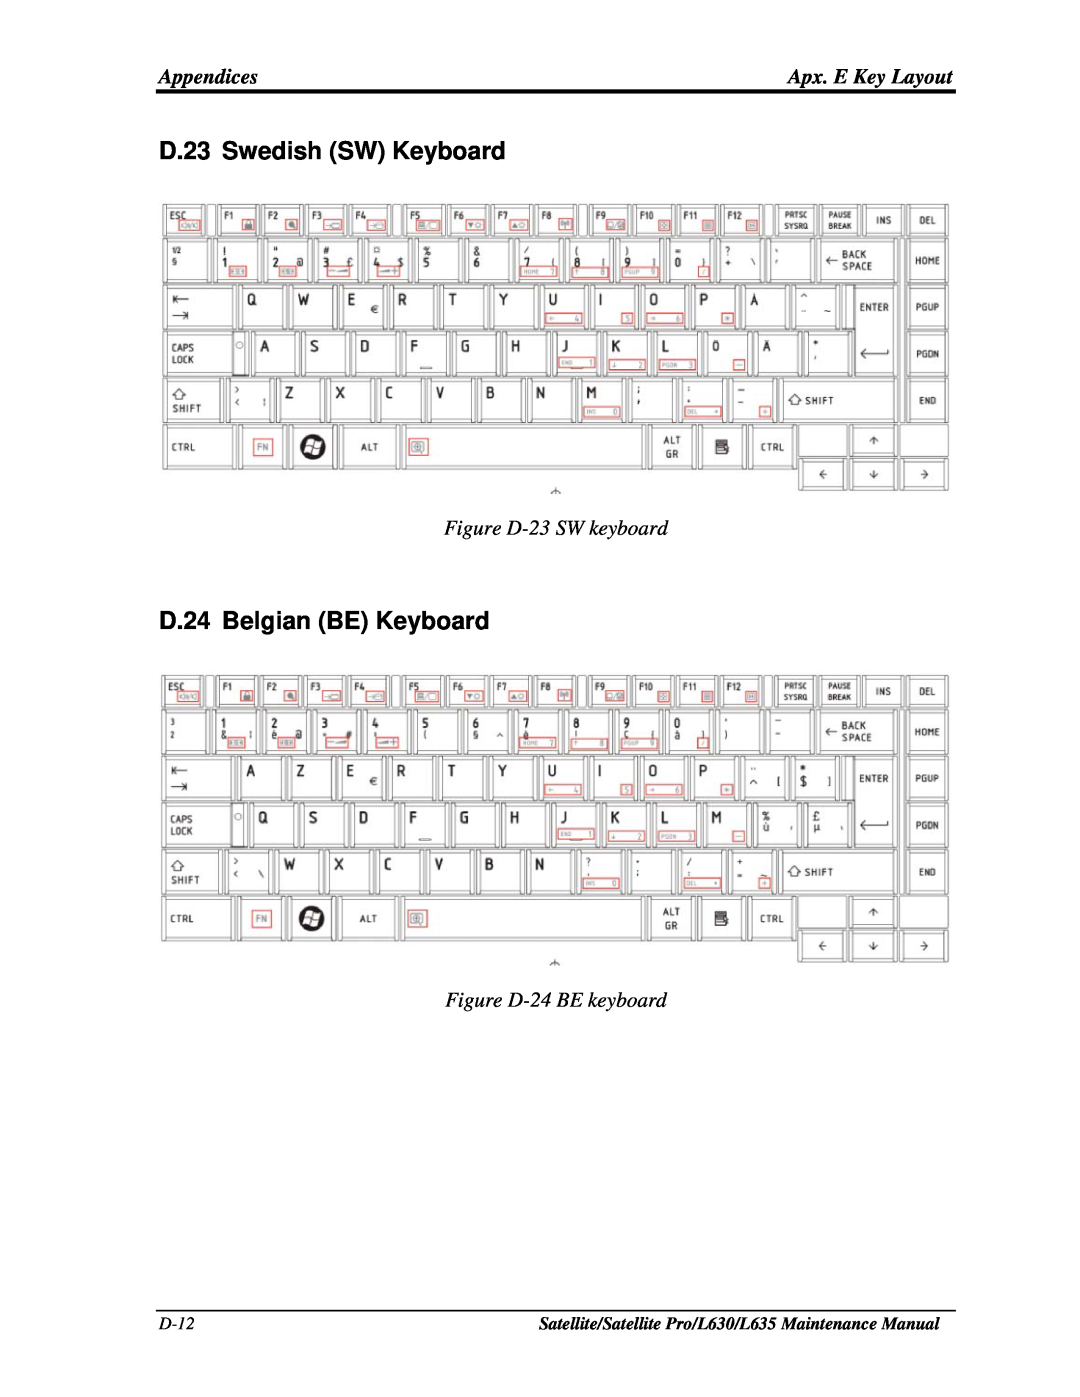 Toshiba L630 D.23 Swedish SW Keyboard, D.24 Belgian BE Keyboard, Figure D-23 SW keyboard, Figure D-24 BE keyboard, D-12 